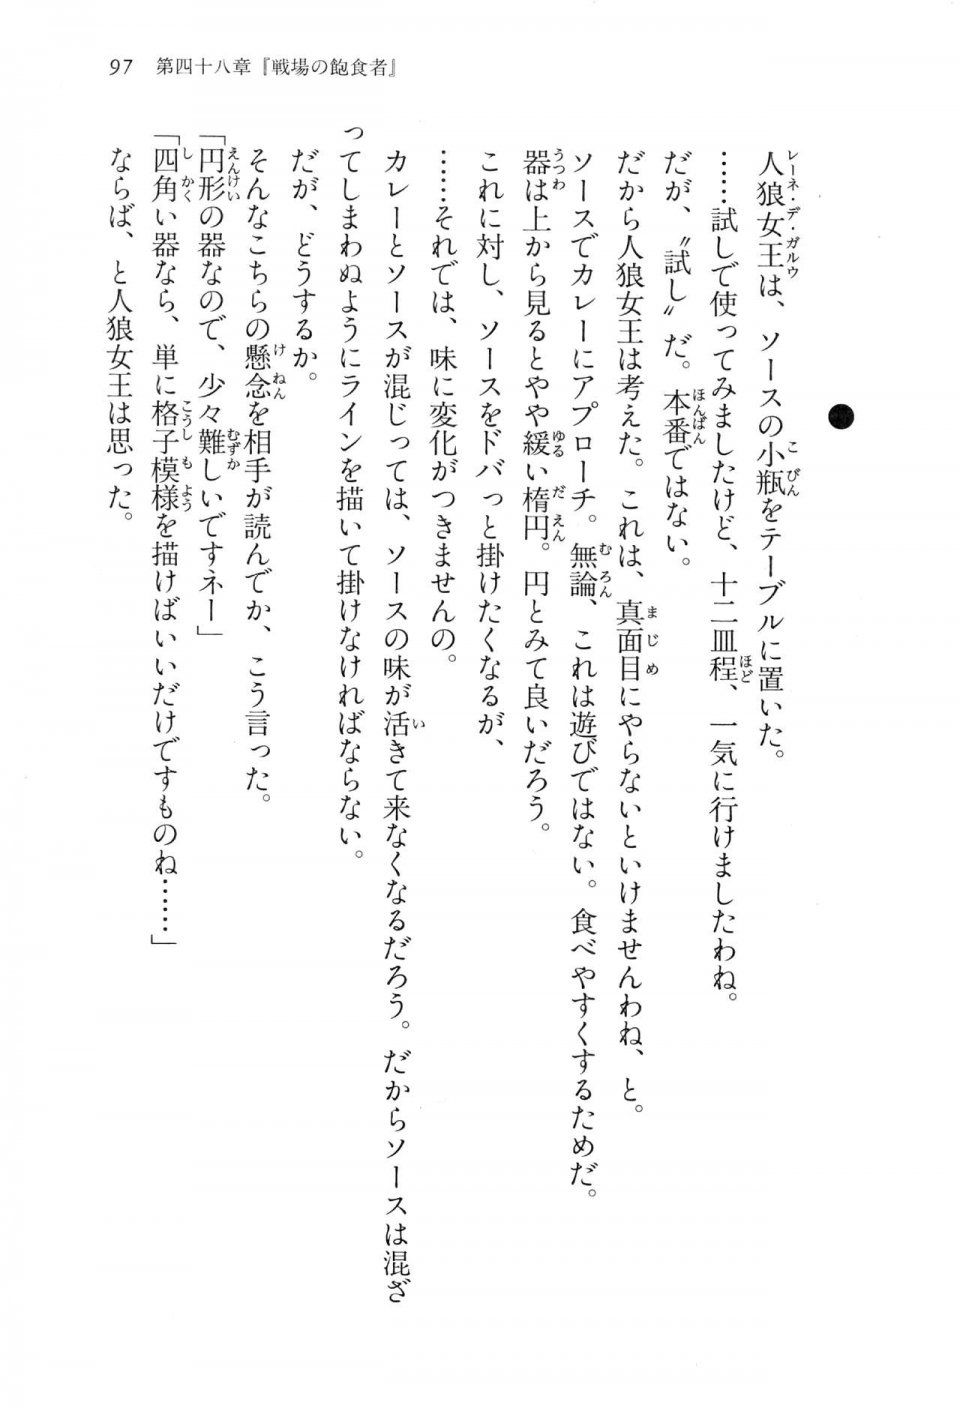 Kyoukai Senjou no Horizon LN Vol 15(6C) Part 1 - Photo #97